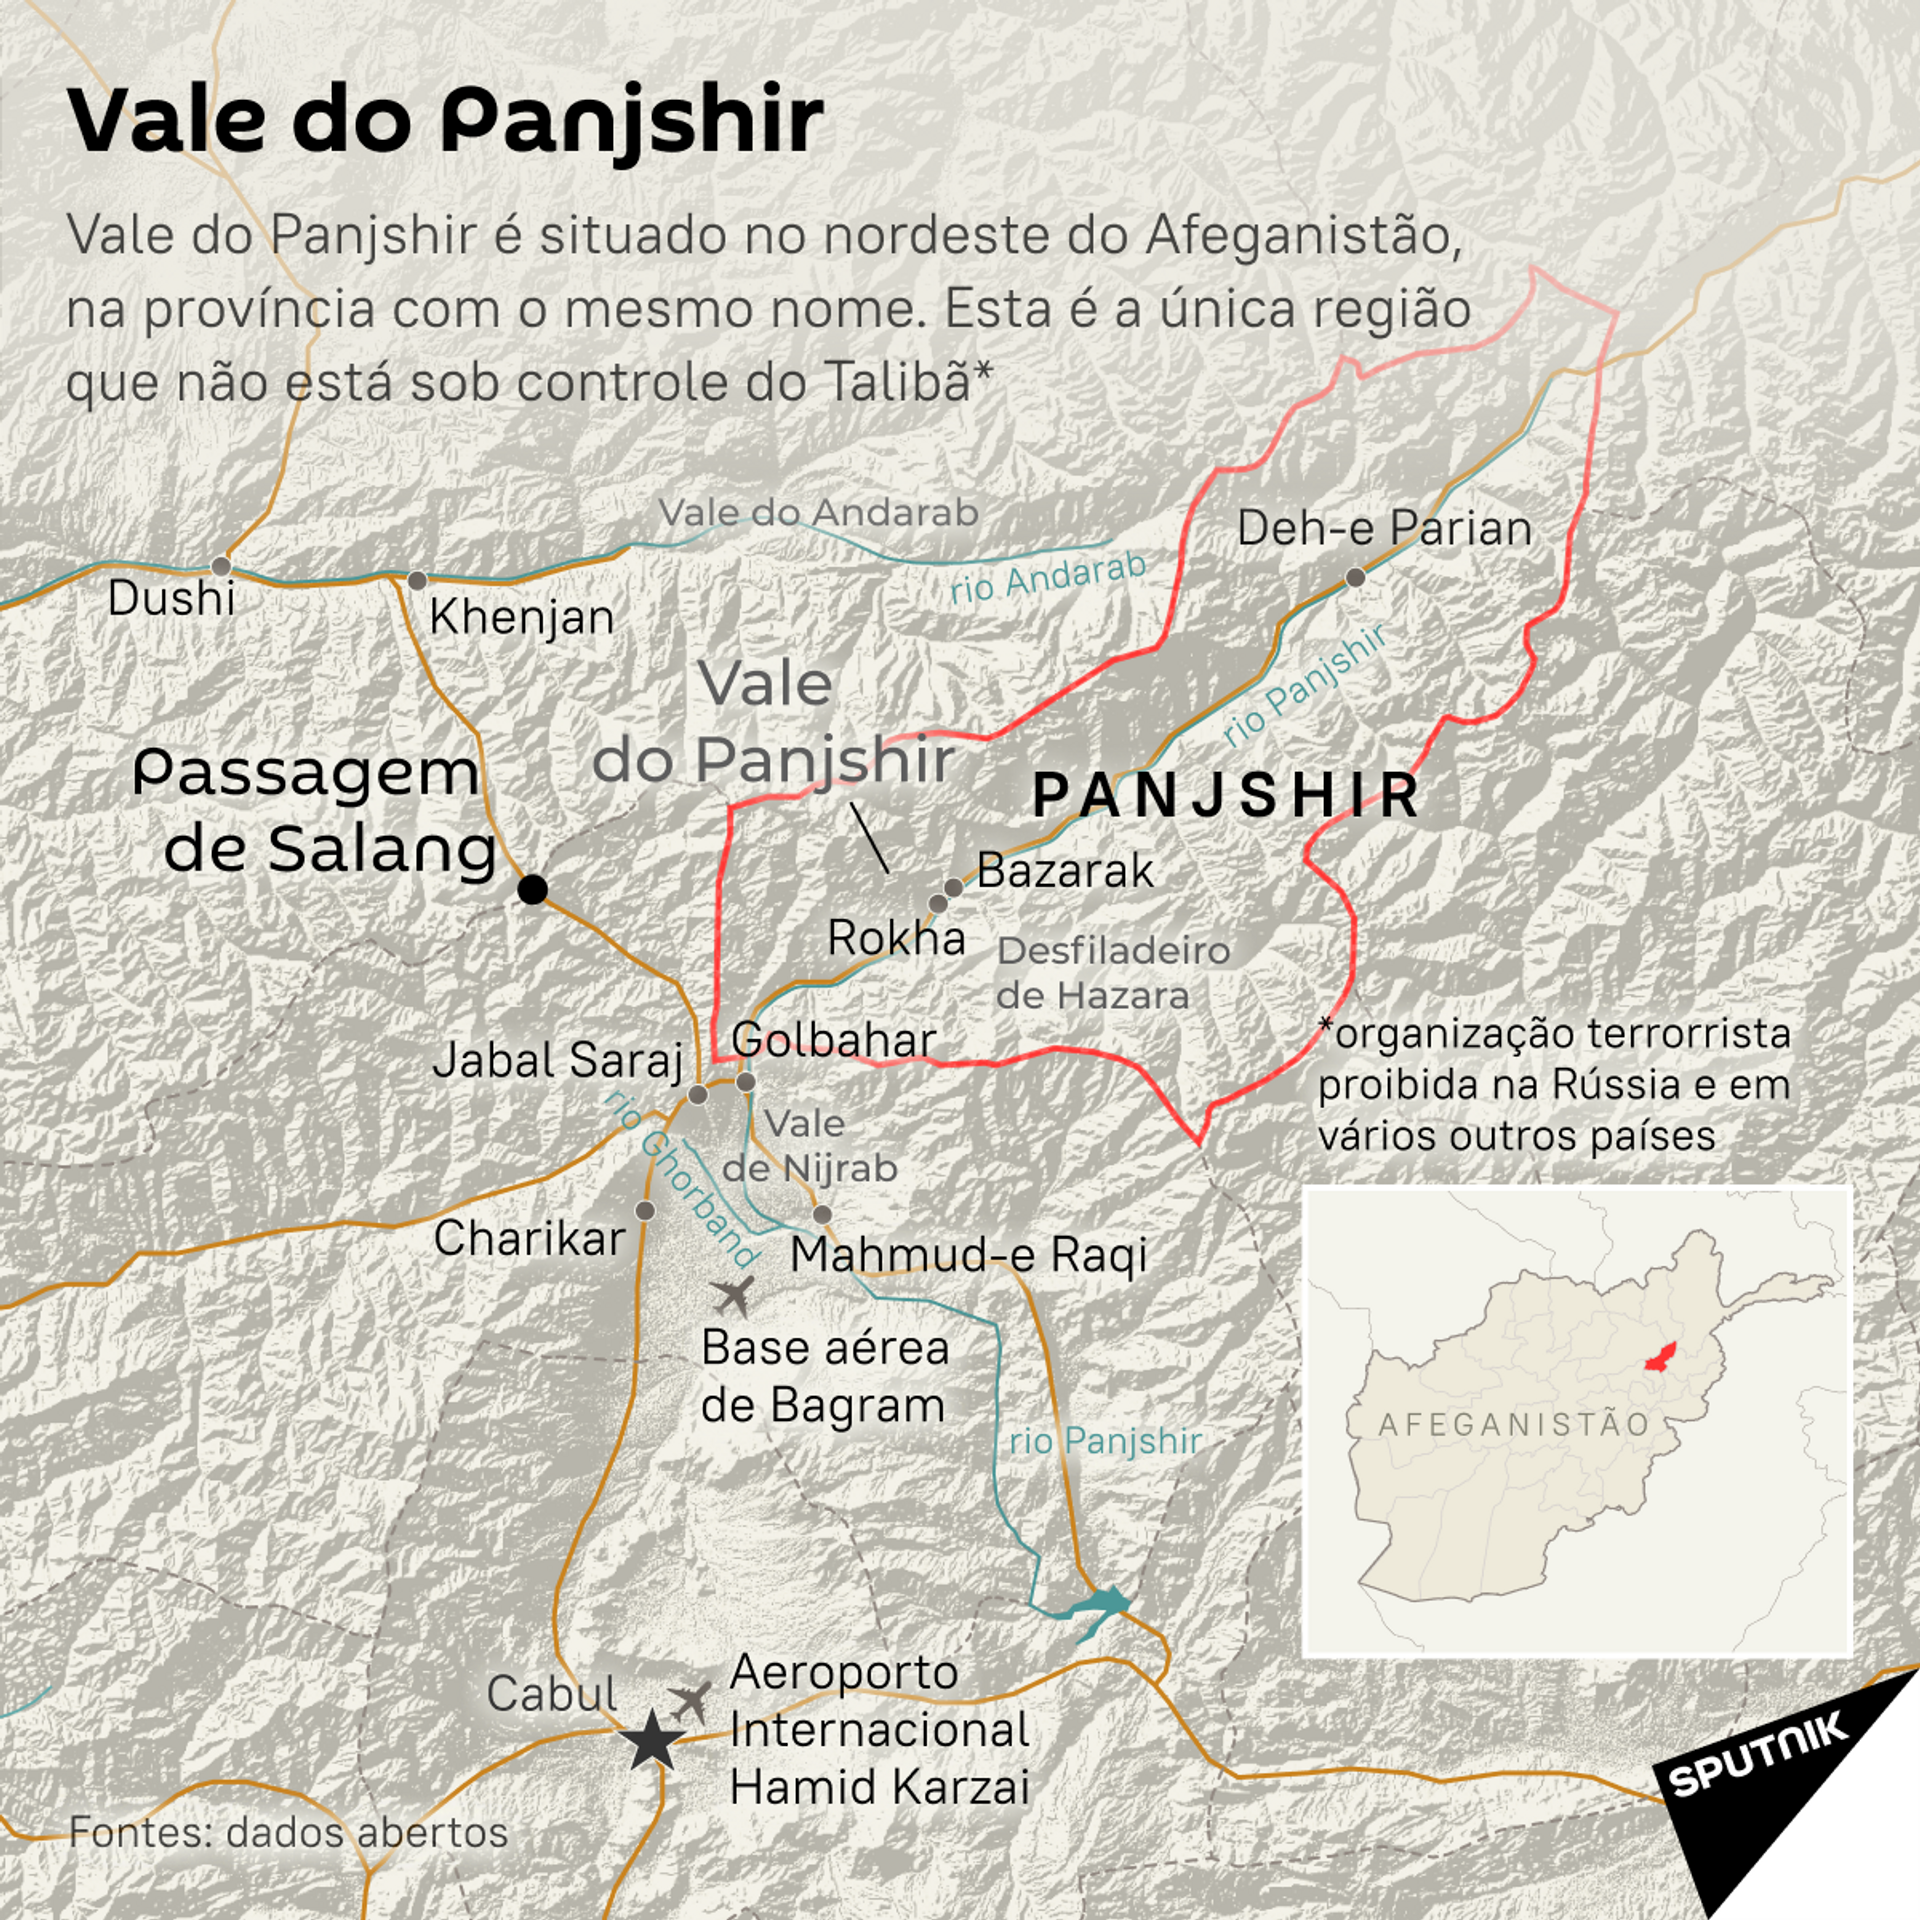 Talibã corta acesso à Internet no Vale do Panjshir, relata mídia - Sputnik Brasil, 1920, 29.08.2021